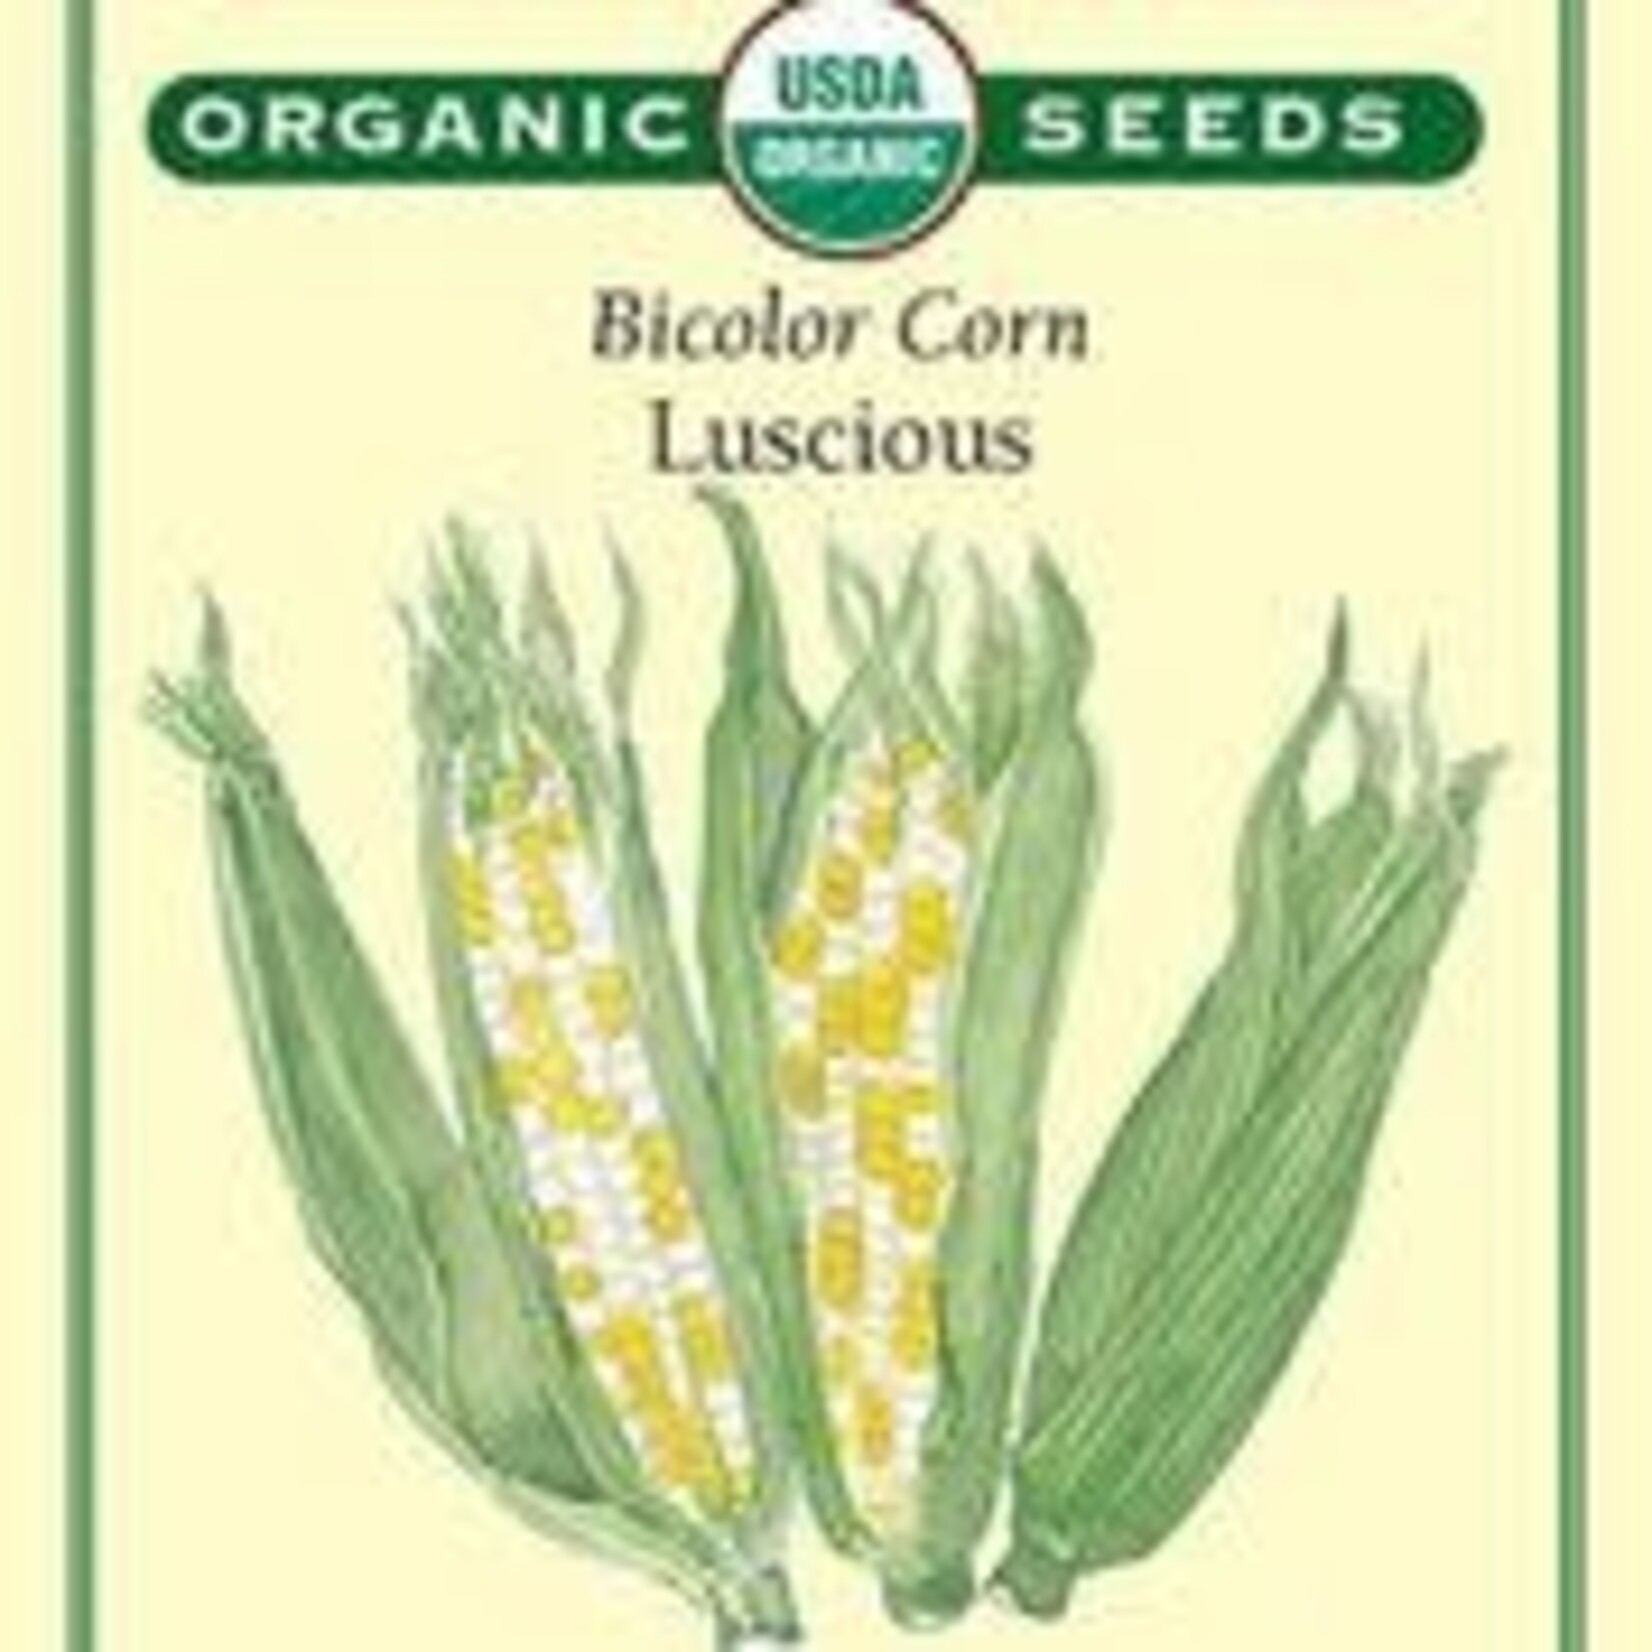 Renee's Bicolour Corn Luscious Seeds